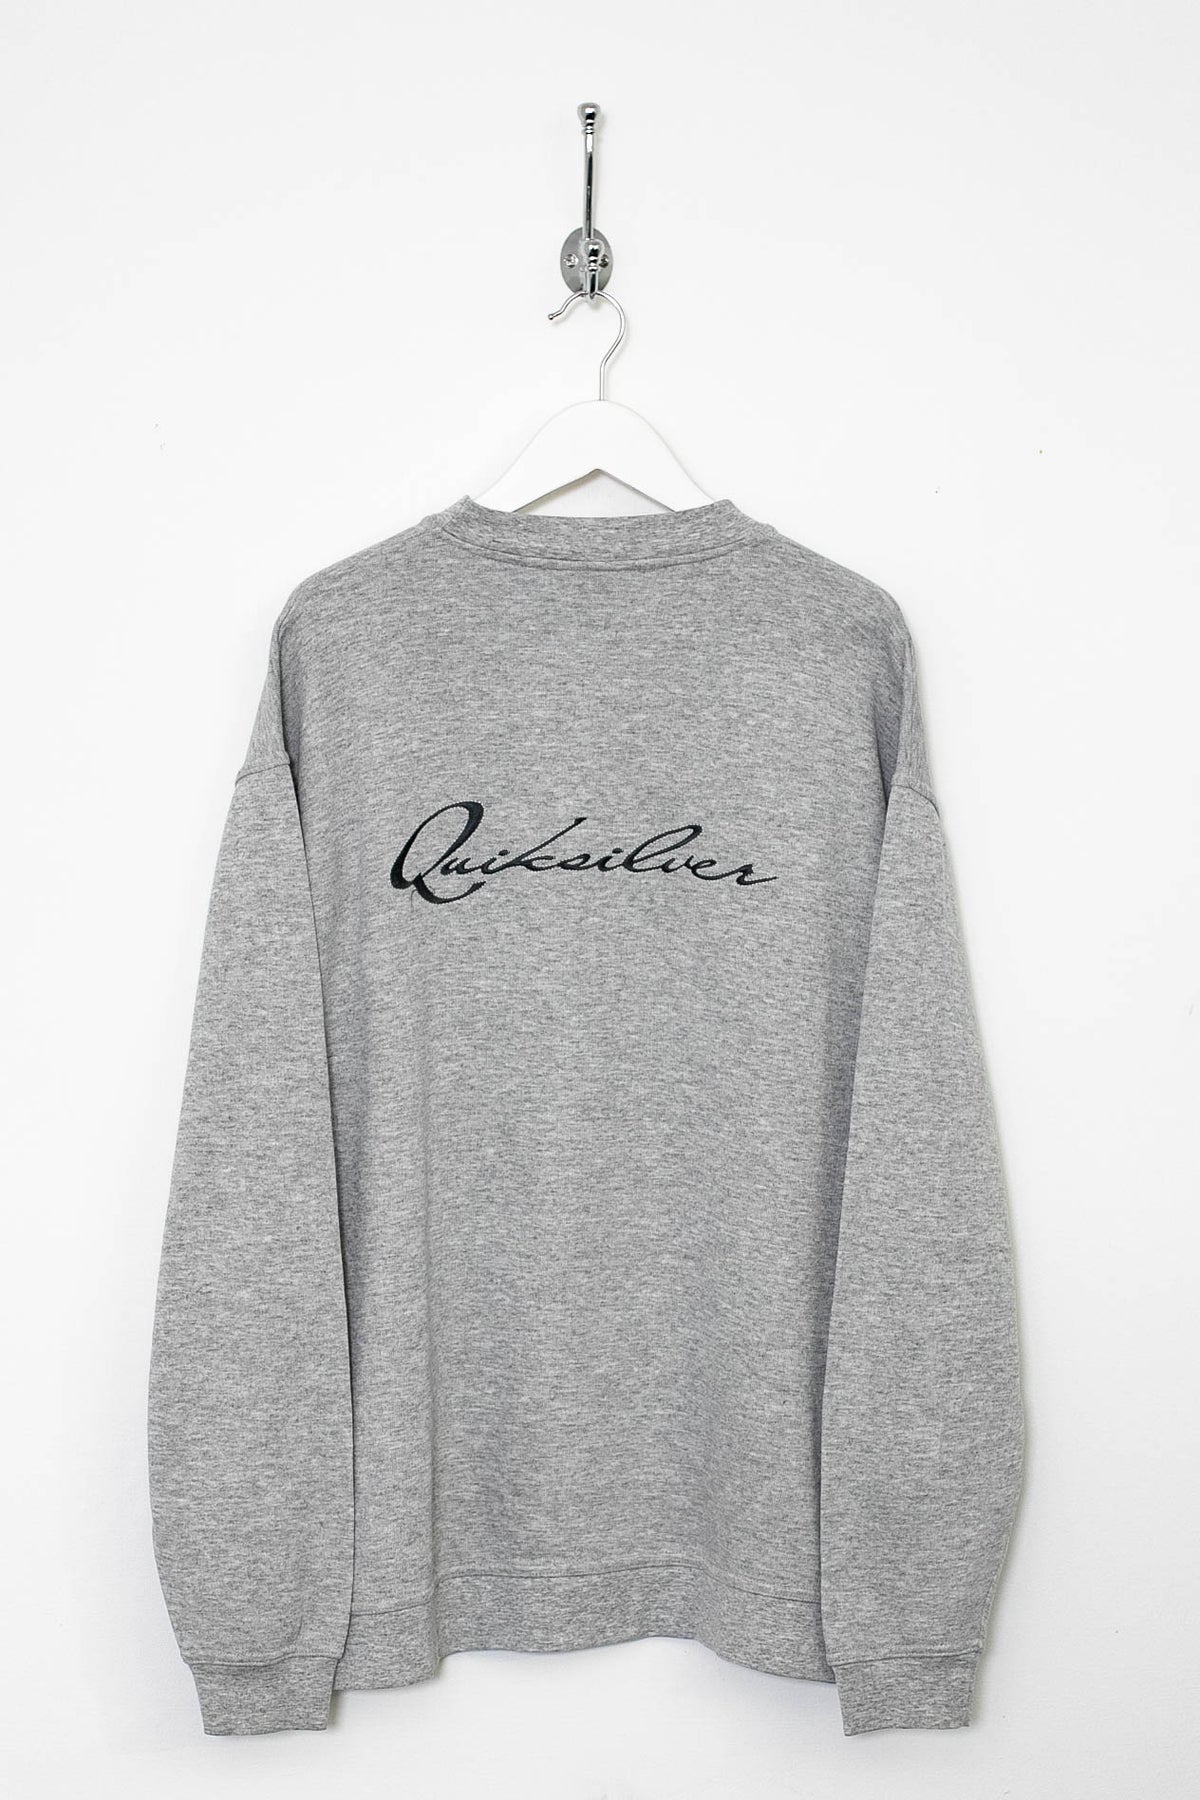 00s Quicksilver Sweatshirt (M)